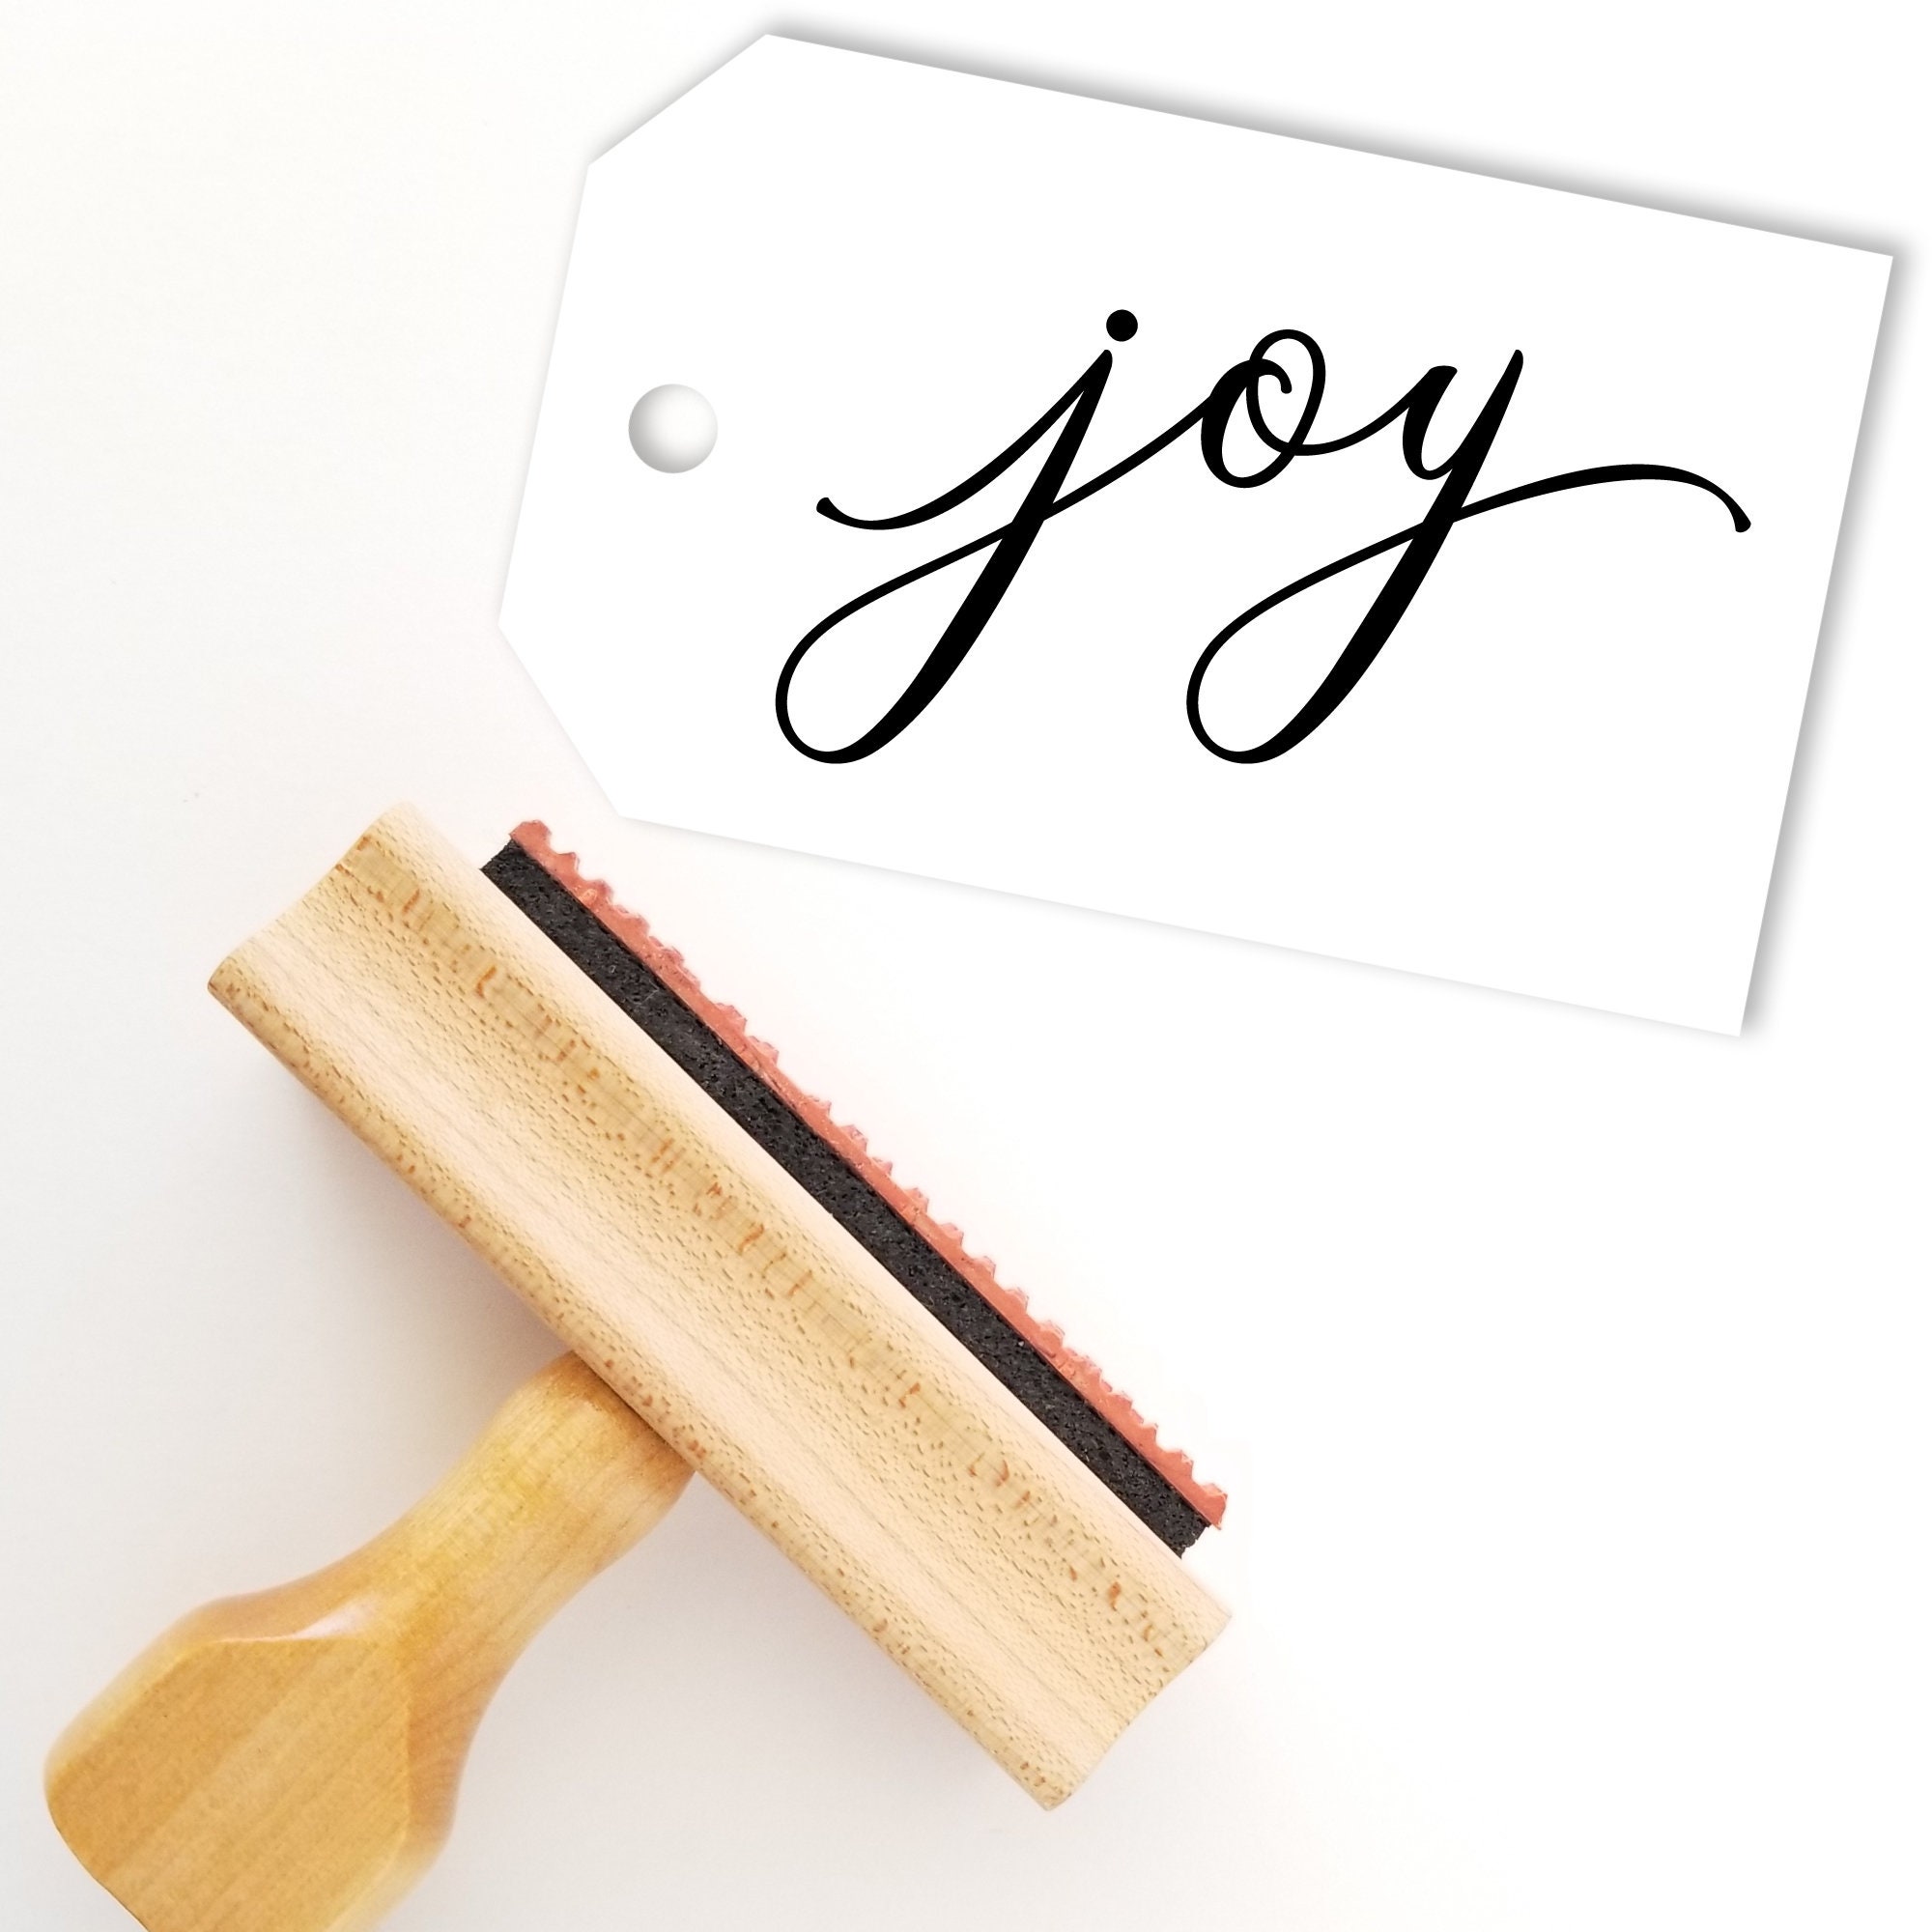 10 Choose JOY Hand Stamped Mini Tags Choose Joy Choose Joy Tag Happy Tag  Happy Mail Choose Joy Stamp Happy Mail Tags Joy Tag 